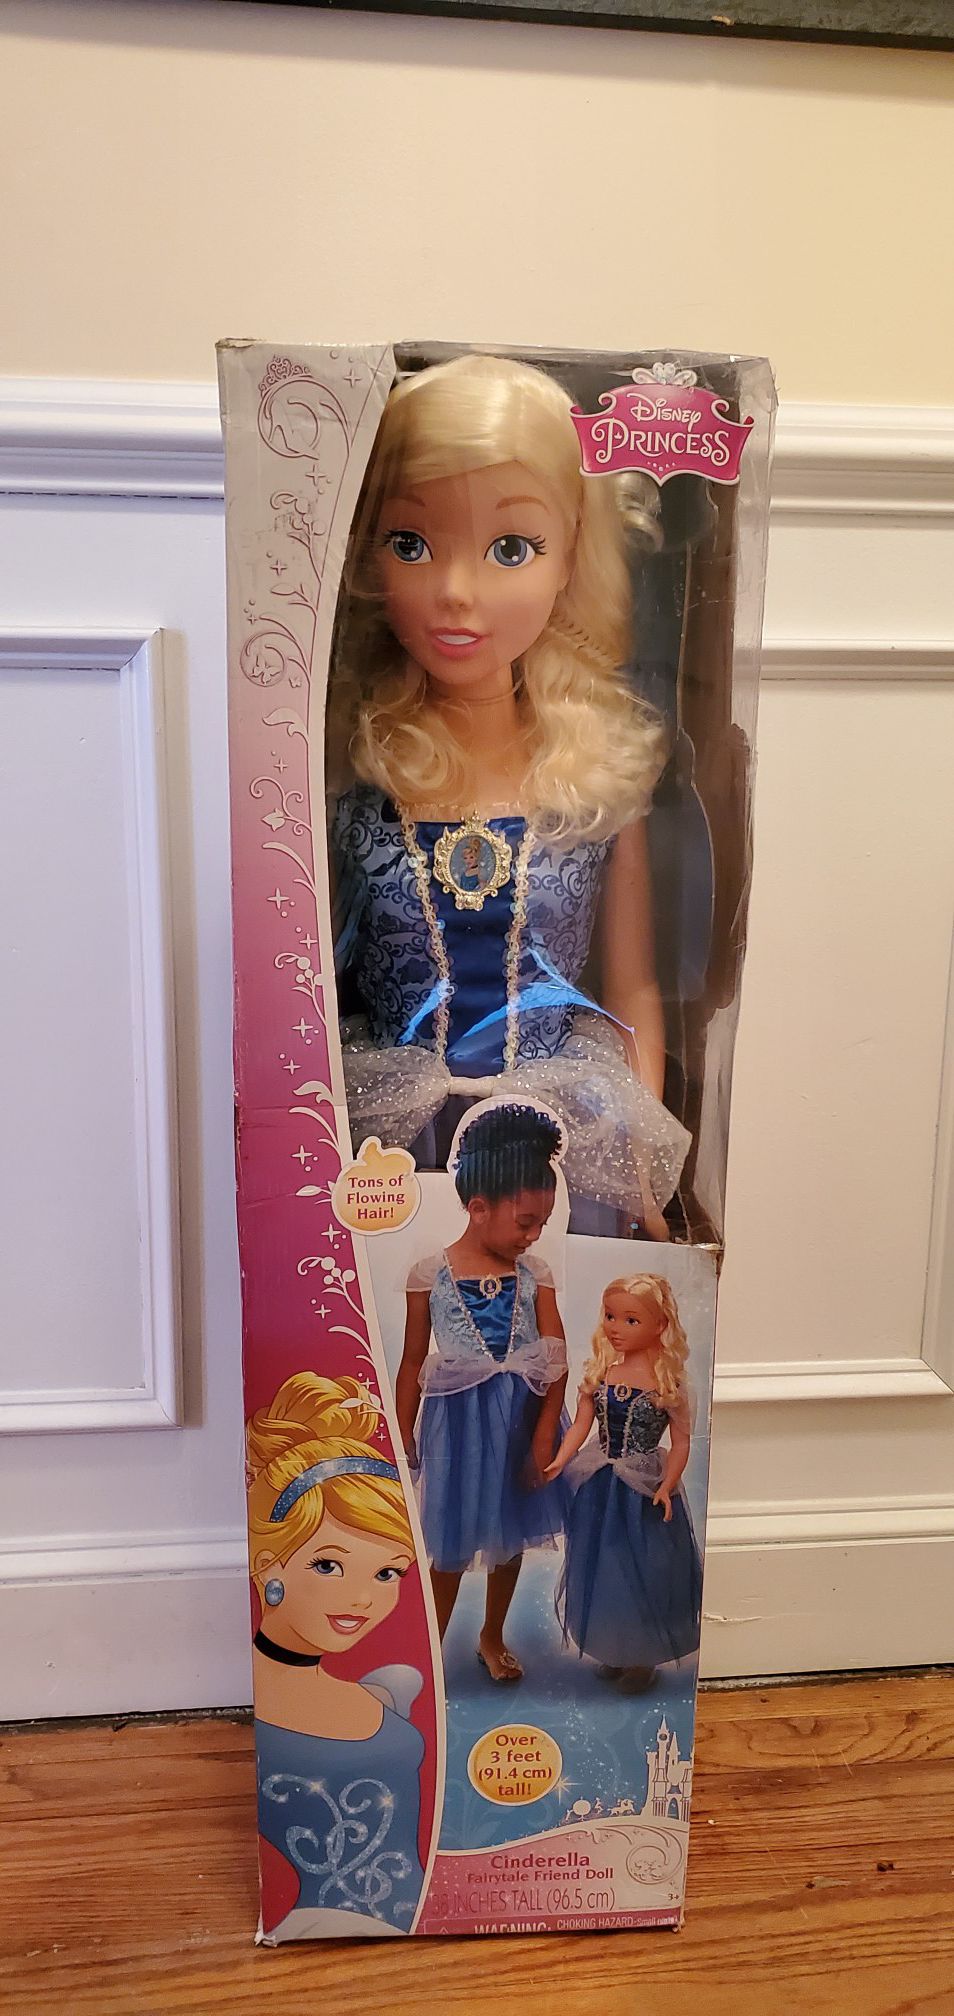 Disney princess Cinderella doll 38" tall